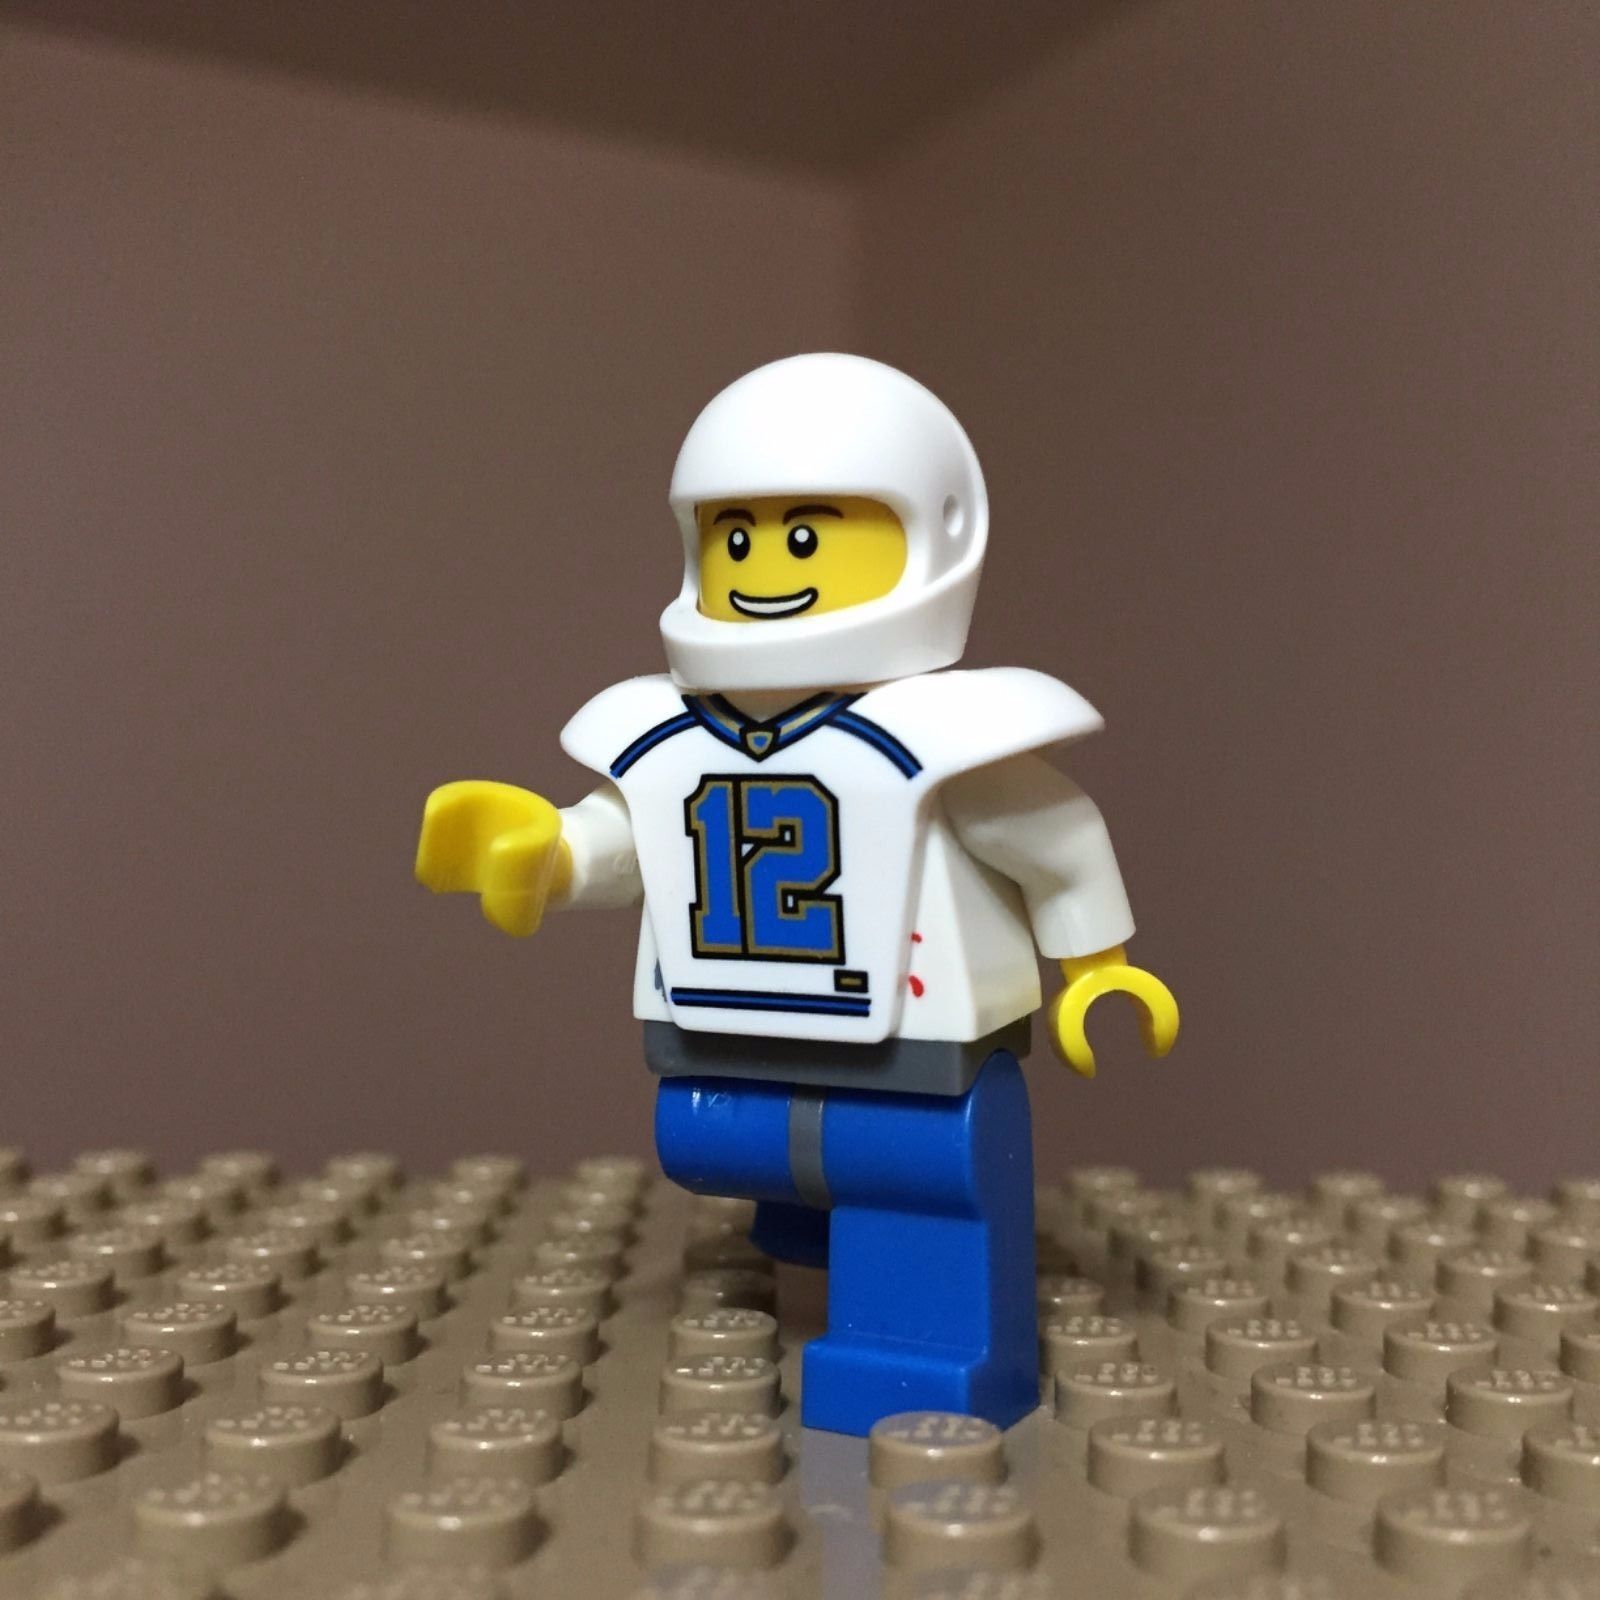 LEGO Football Player Minifigure - Toys & Hobbies